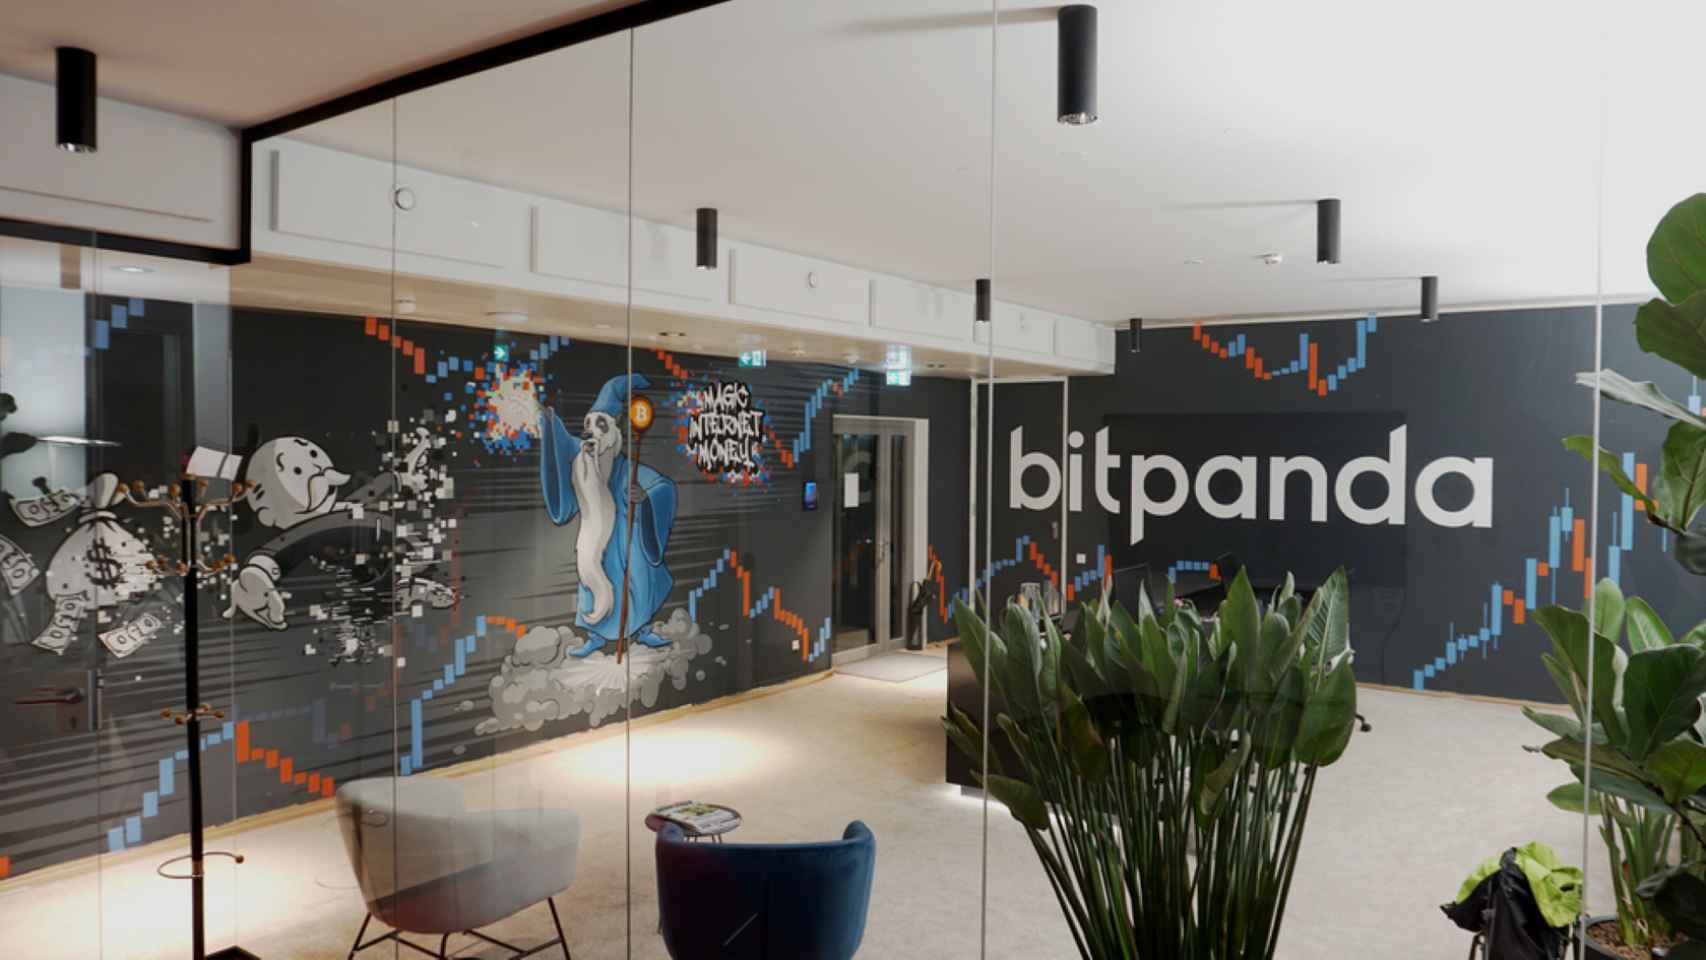 Oficinas de Bitpanda, la 'fintech' fundada en Austria